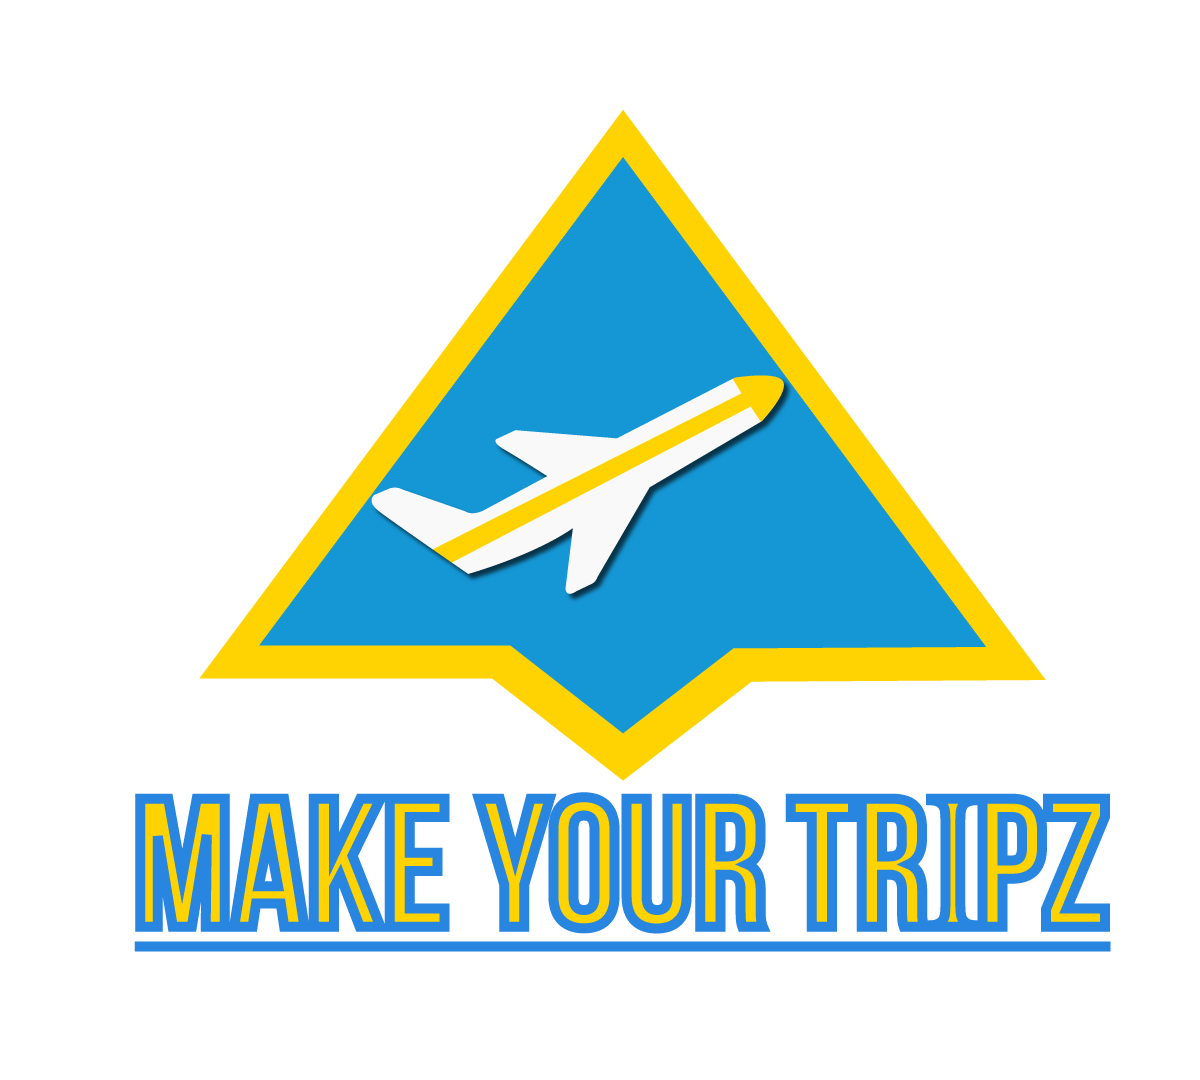 Make Your Tripz